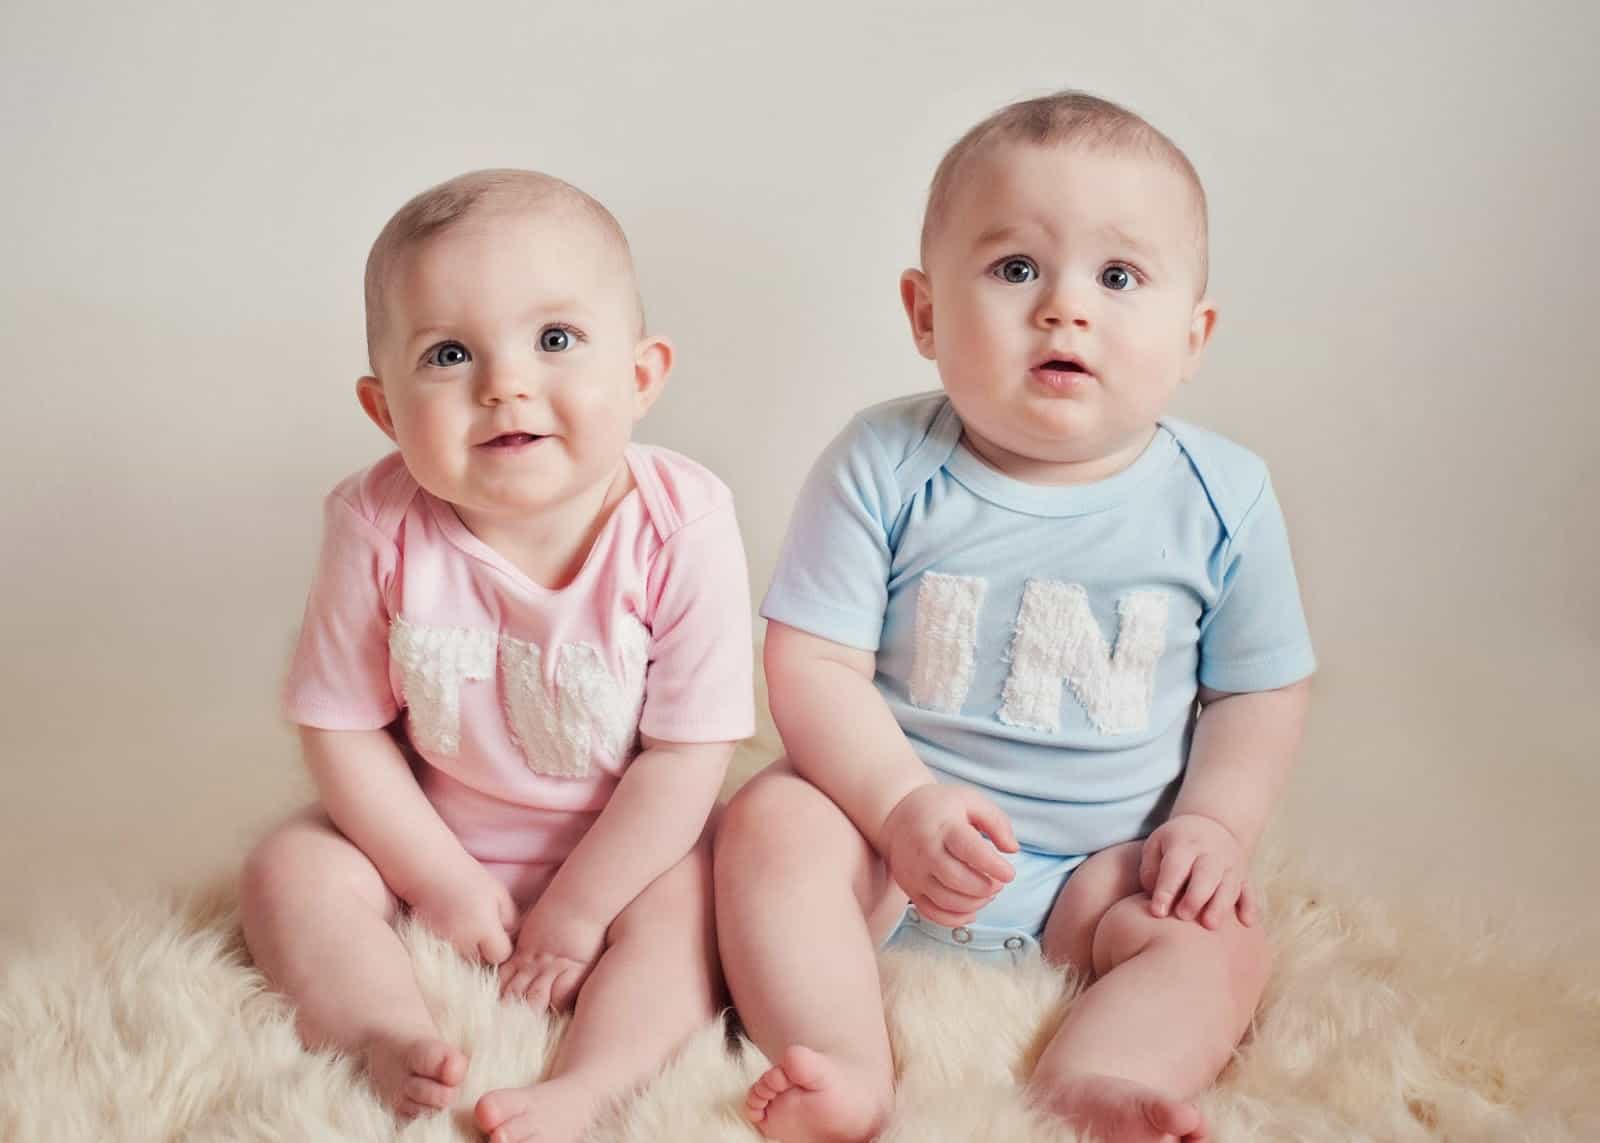 Warum bringen IVF-Programme oft Zwillinge hervor?